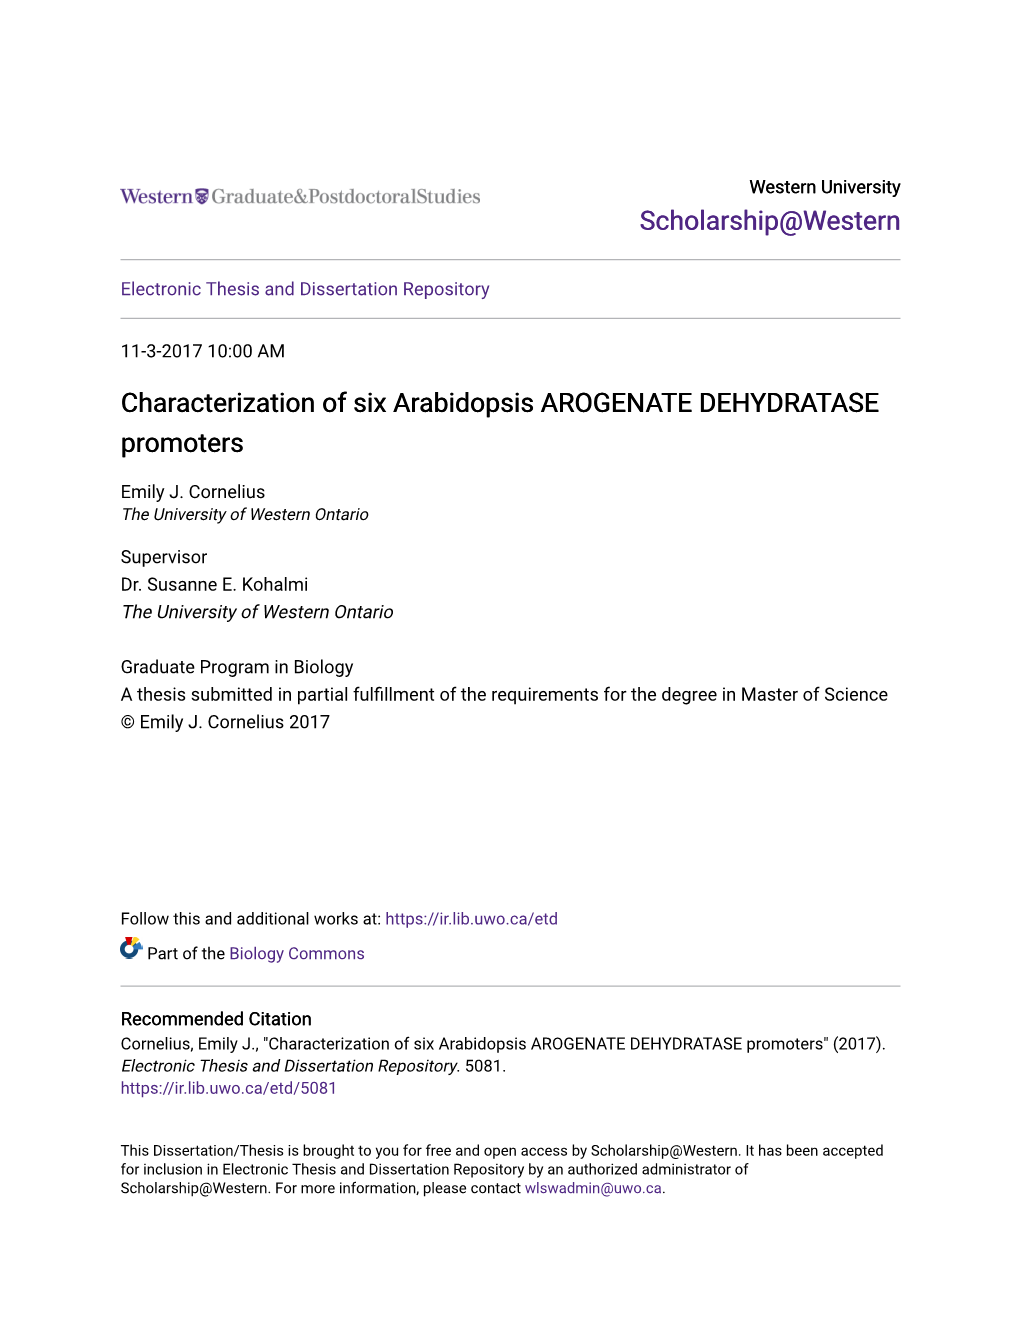 Characterization of Six Arabidopsis AROGENATE DEHYDRATASE Promoters